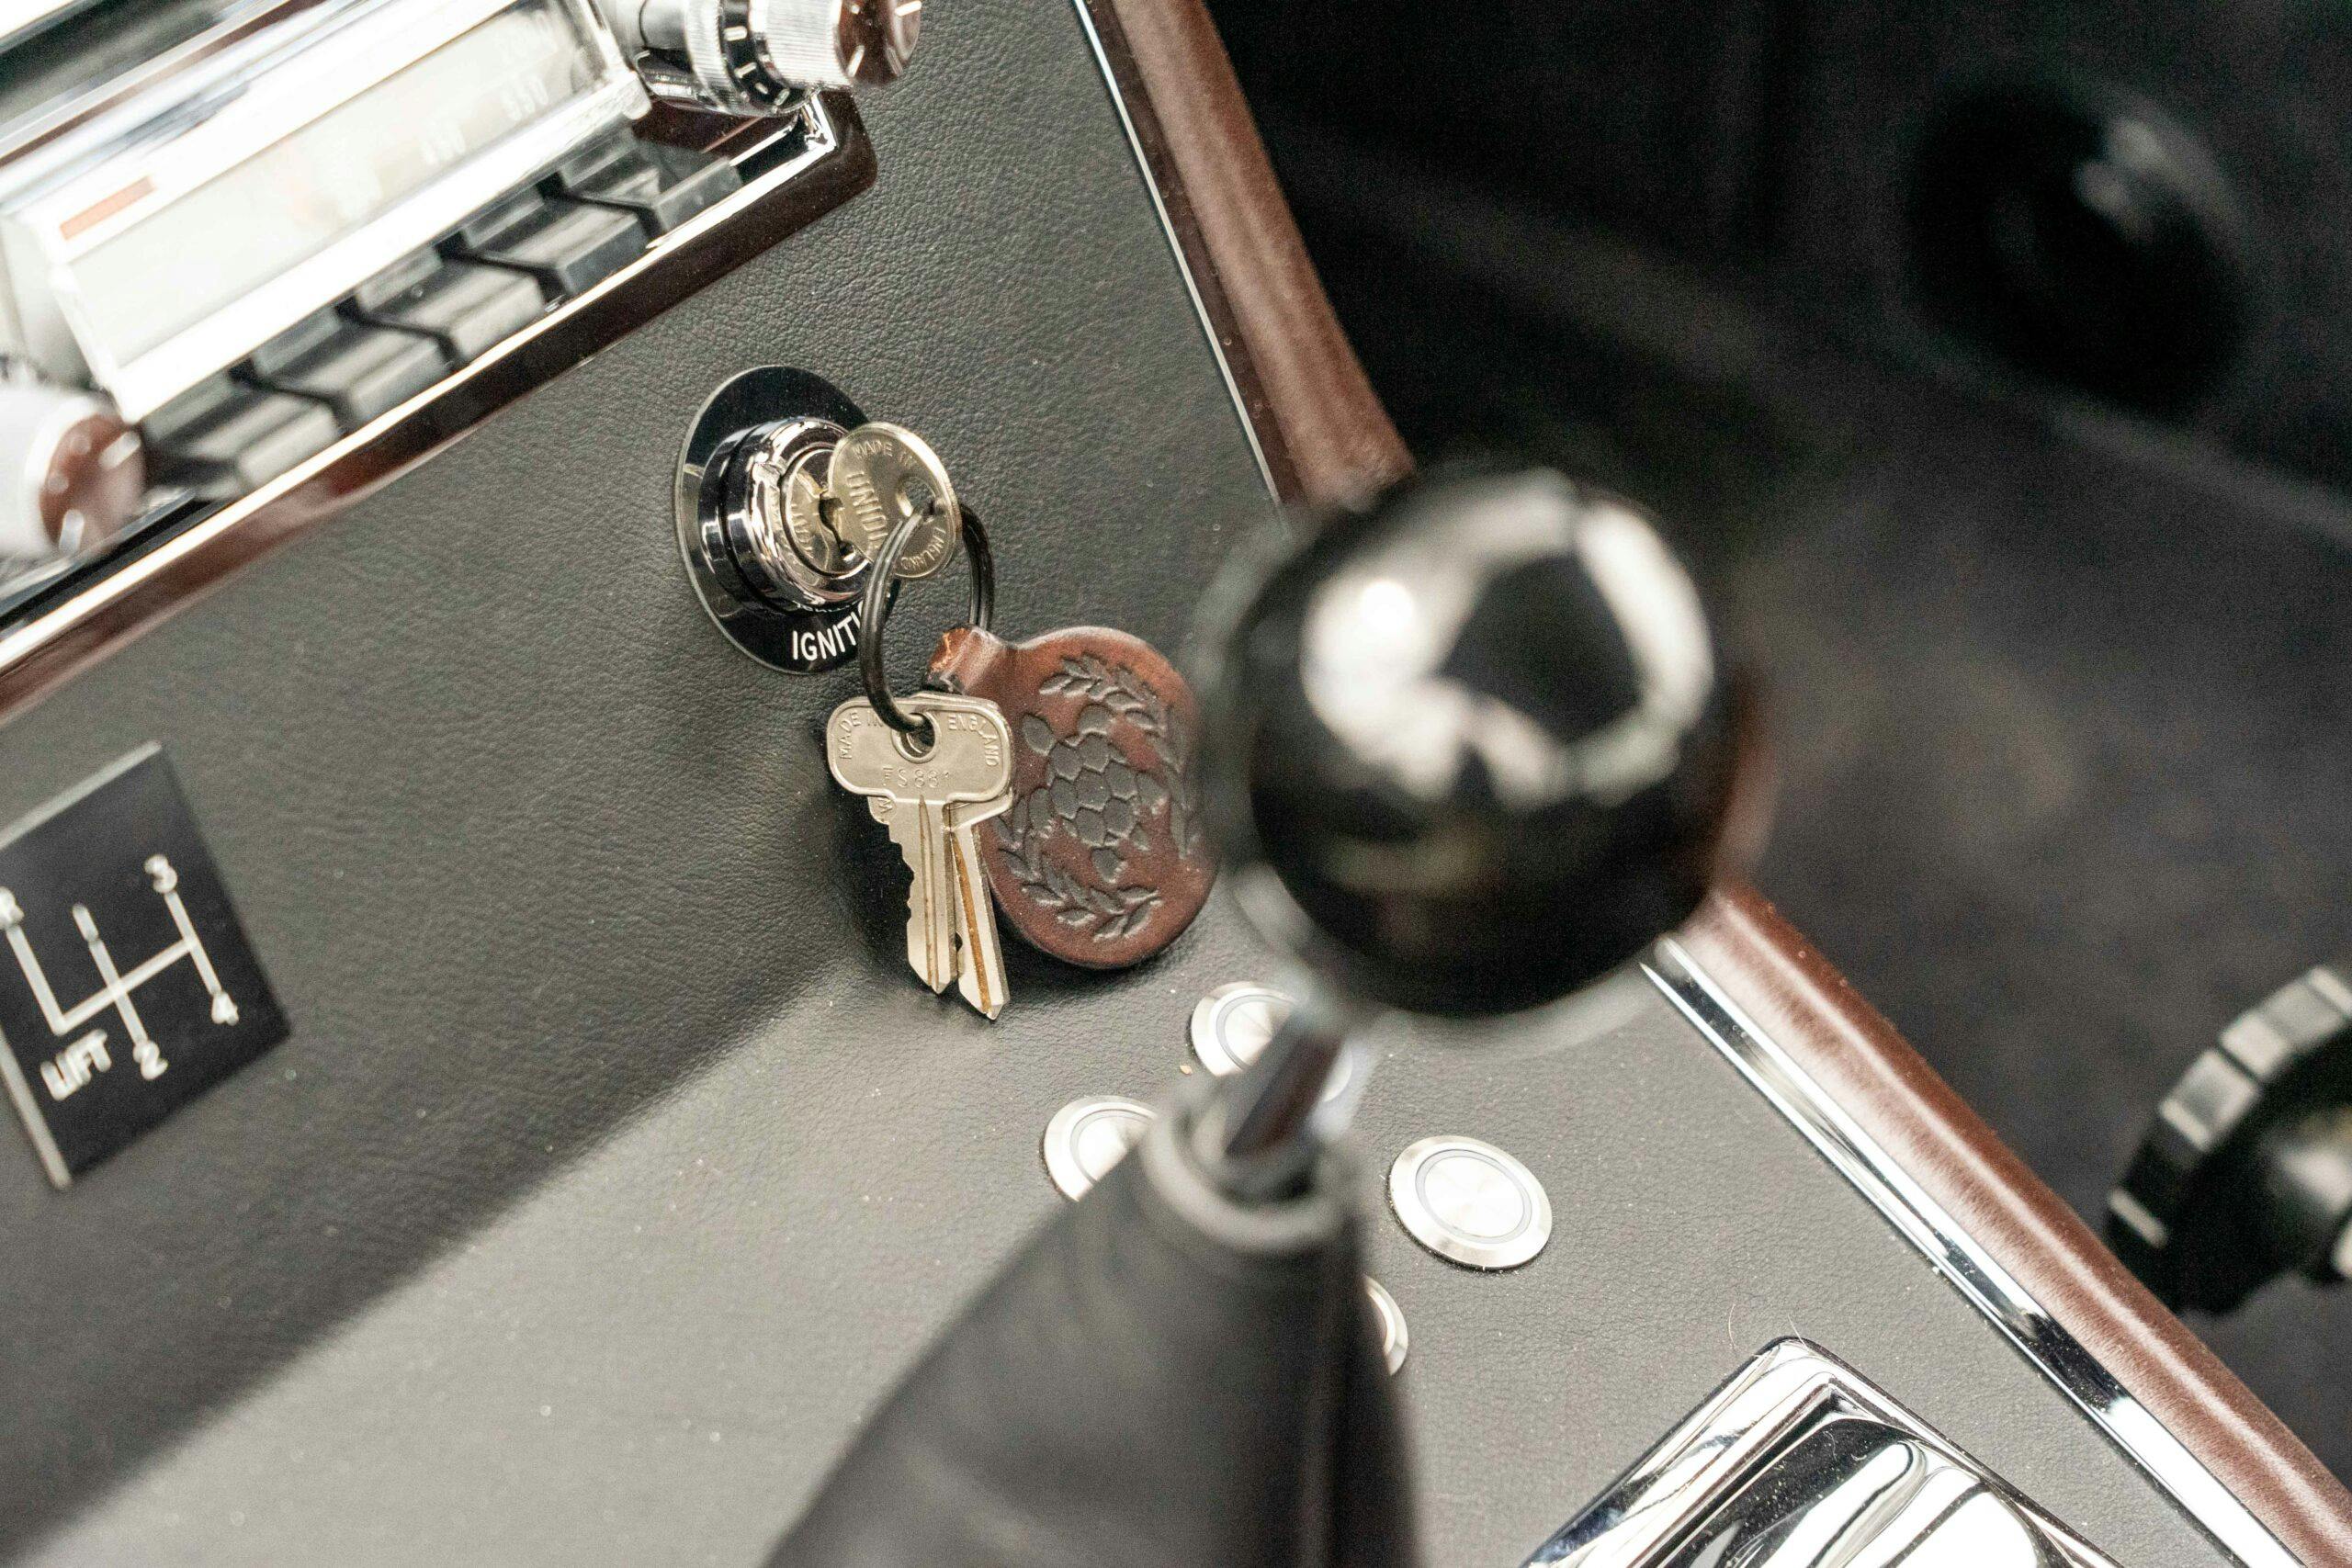 Gordon-Keeble interior ignition keys